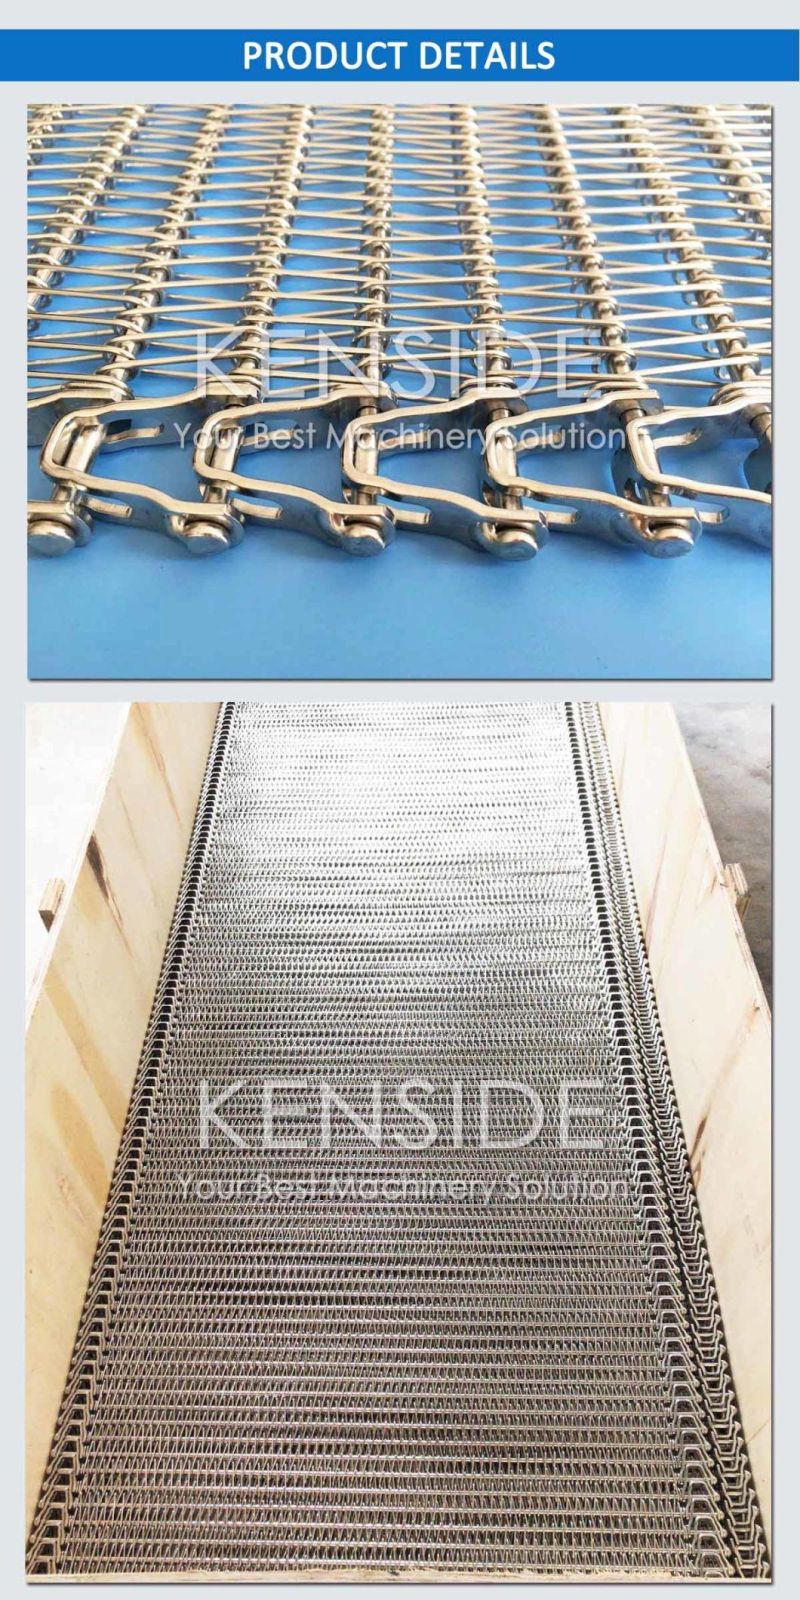 Manufacturer Belting Stainless Steel Spiral Cage Belts for Food Plants, Food Machines